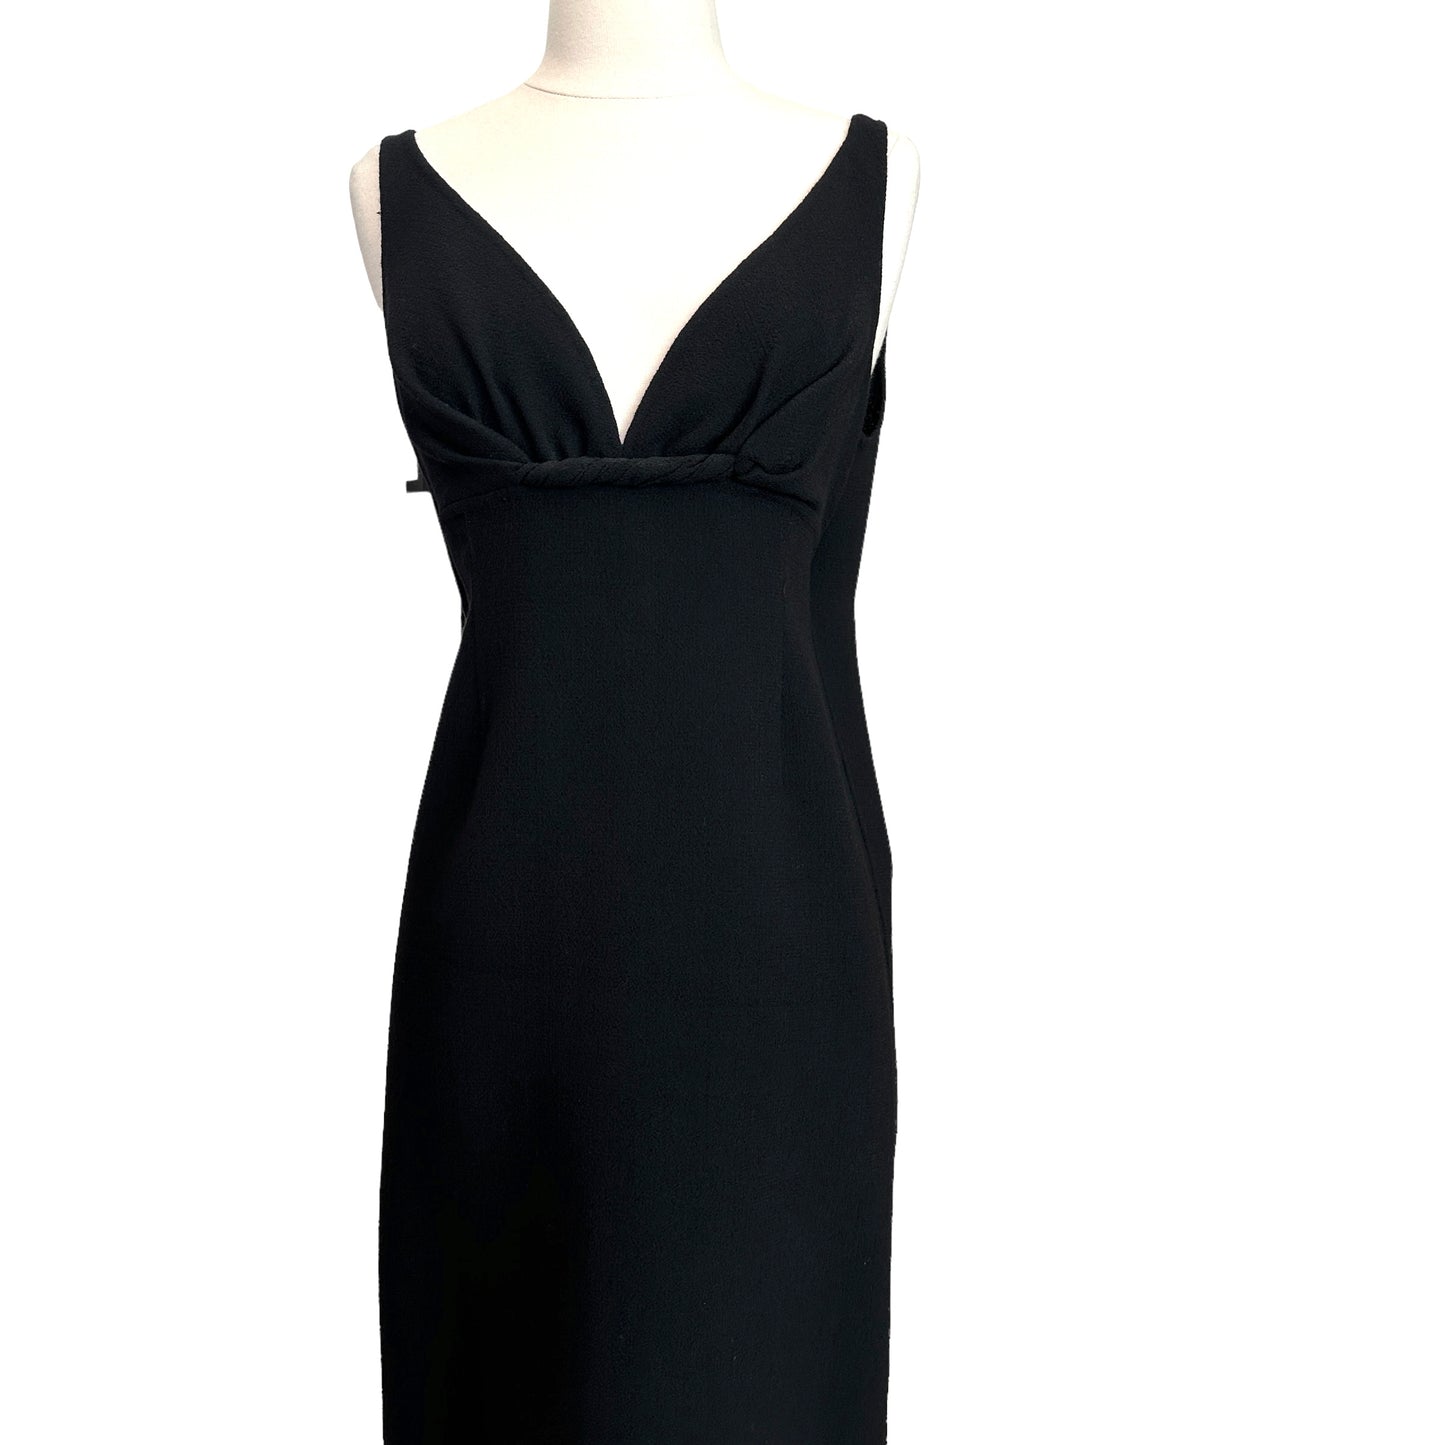 Black Sleeveless Dress - L